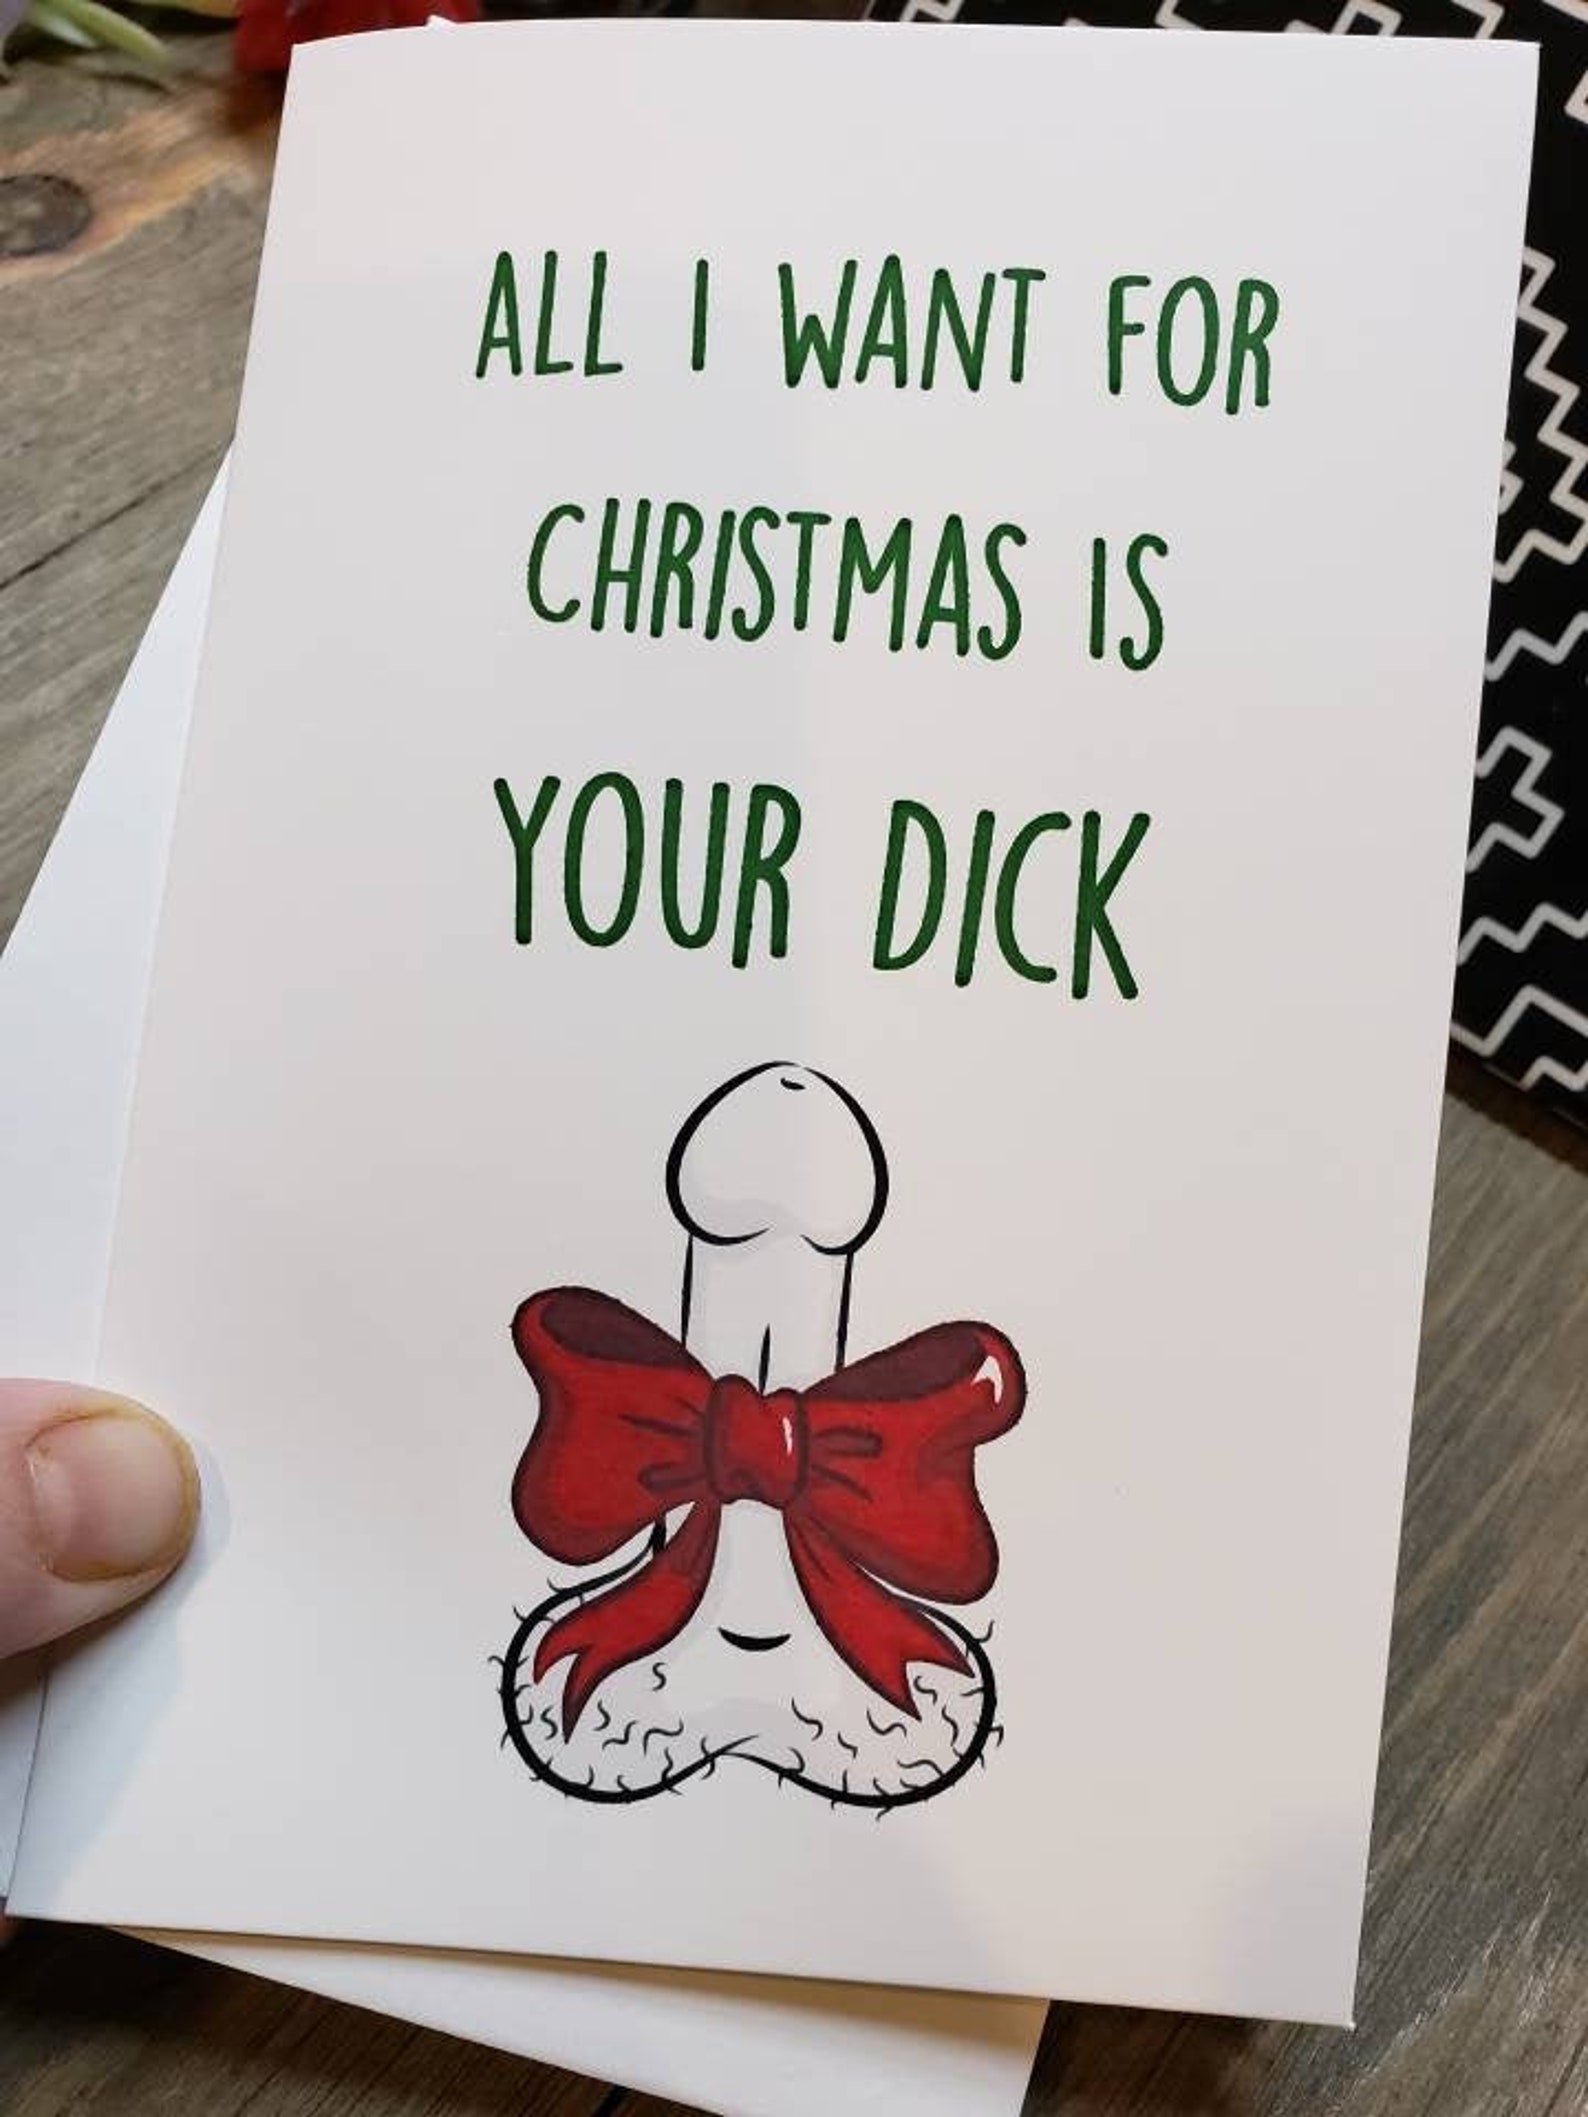 I want dick for christmas com